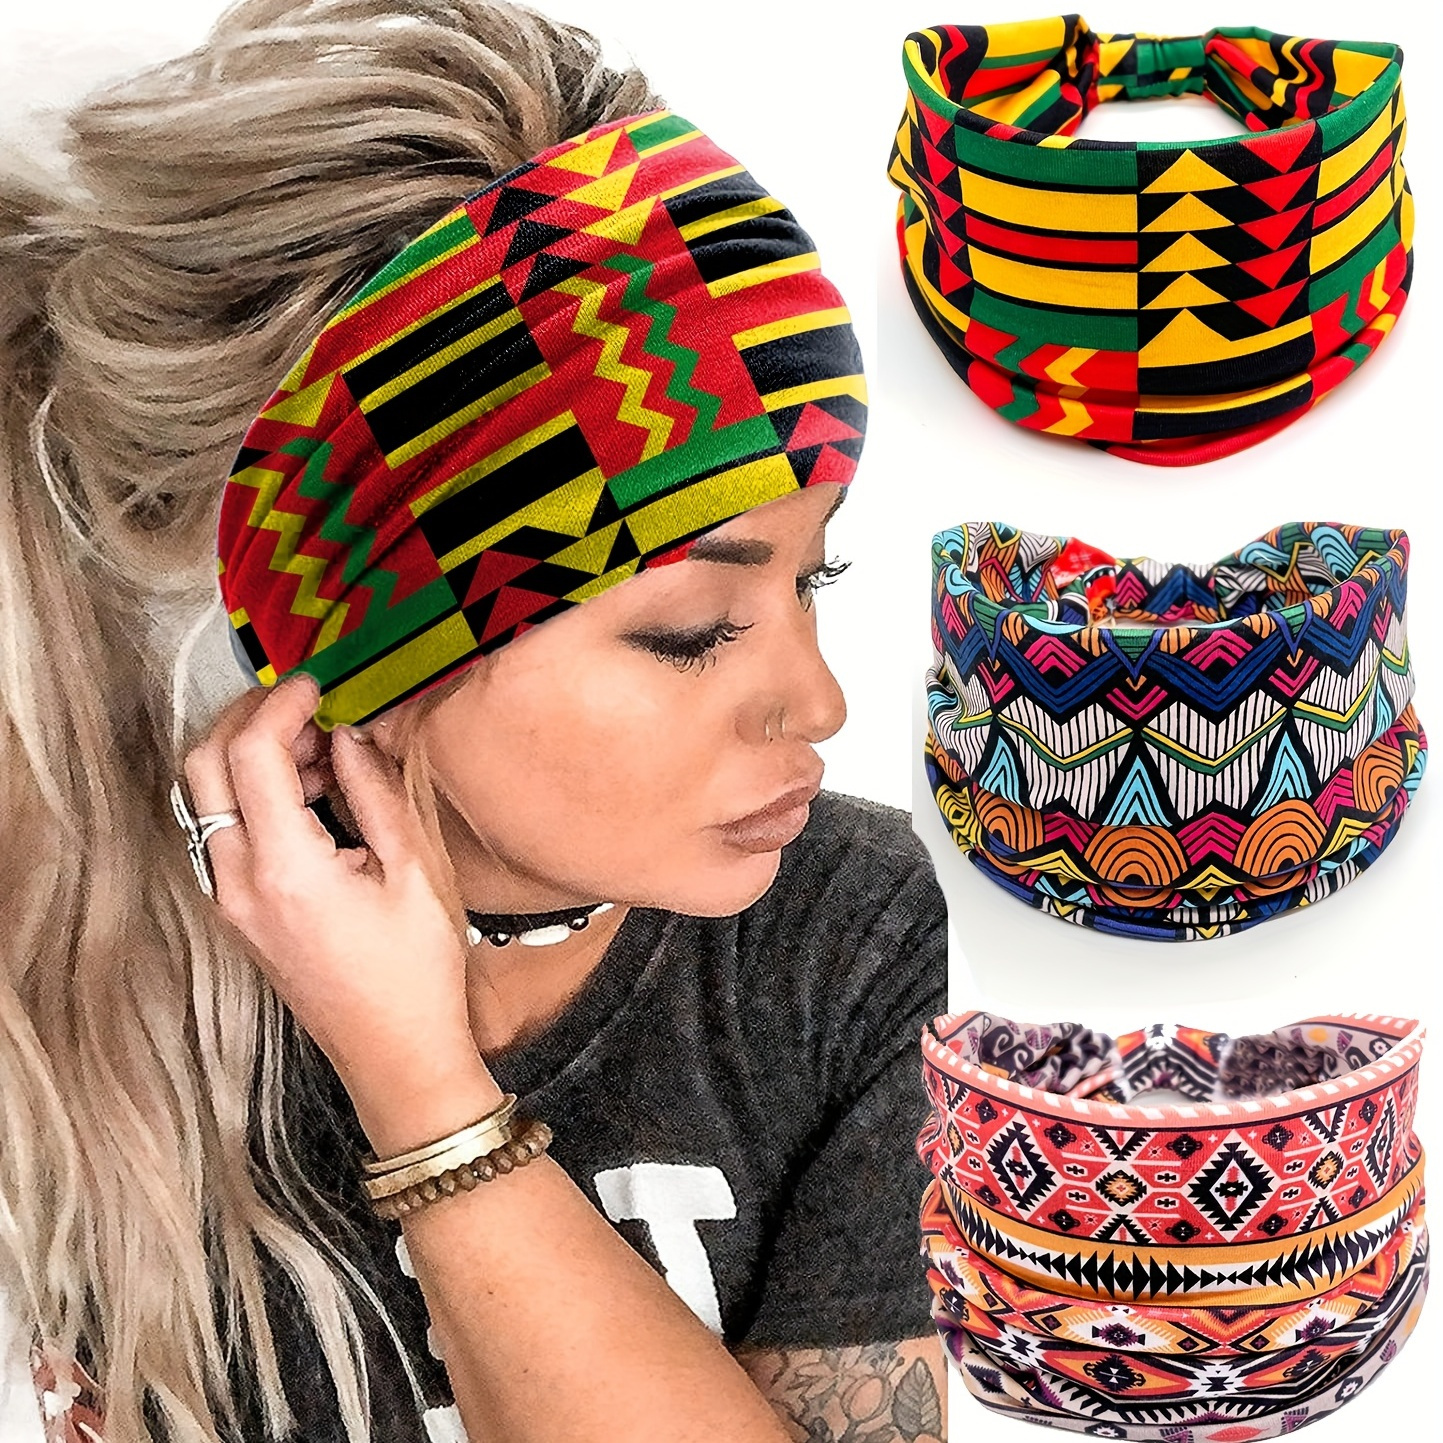 

1pcs Stylish African Printed Boho Headband For Women - Stretchy Yoga Running Turban Hair Accessory